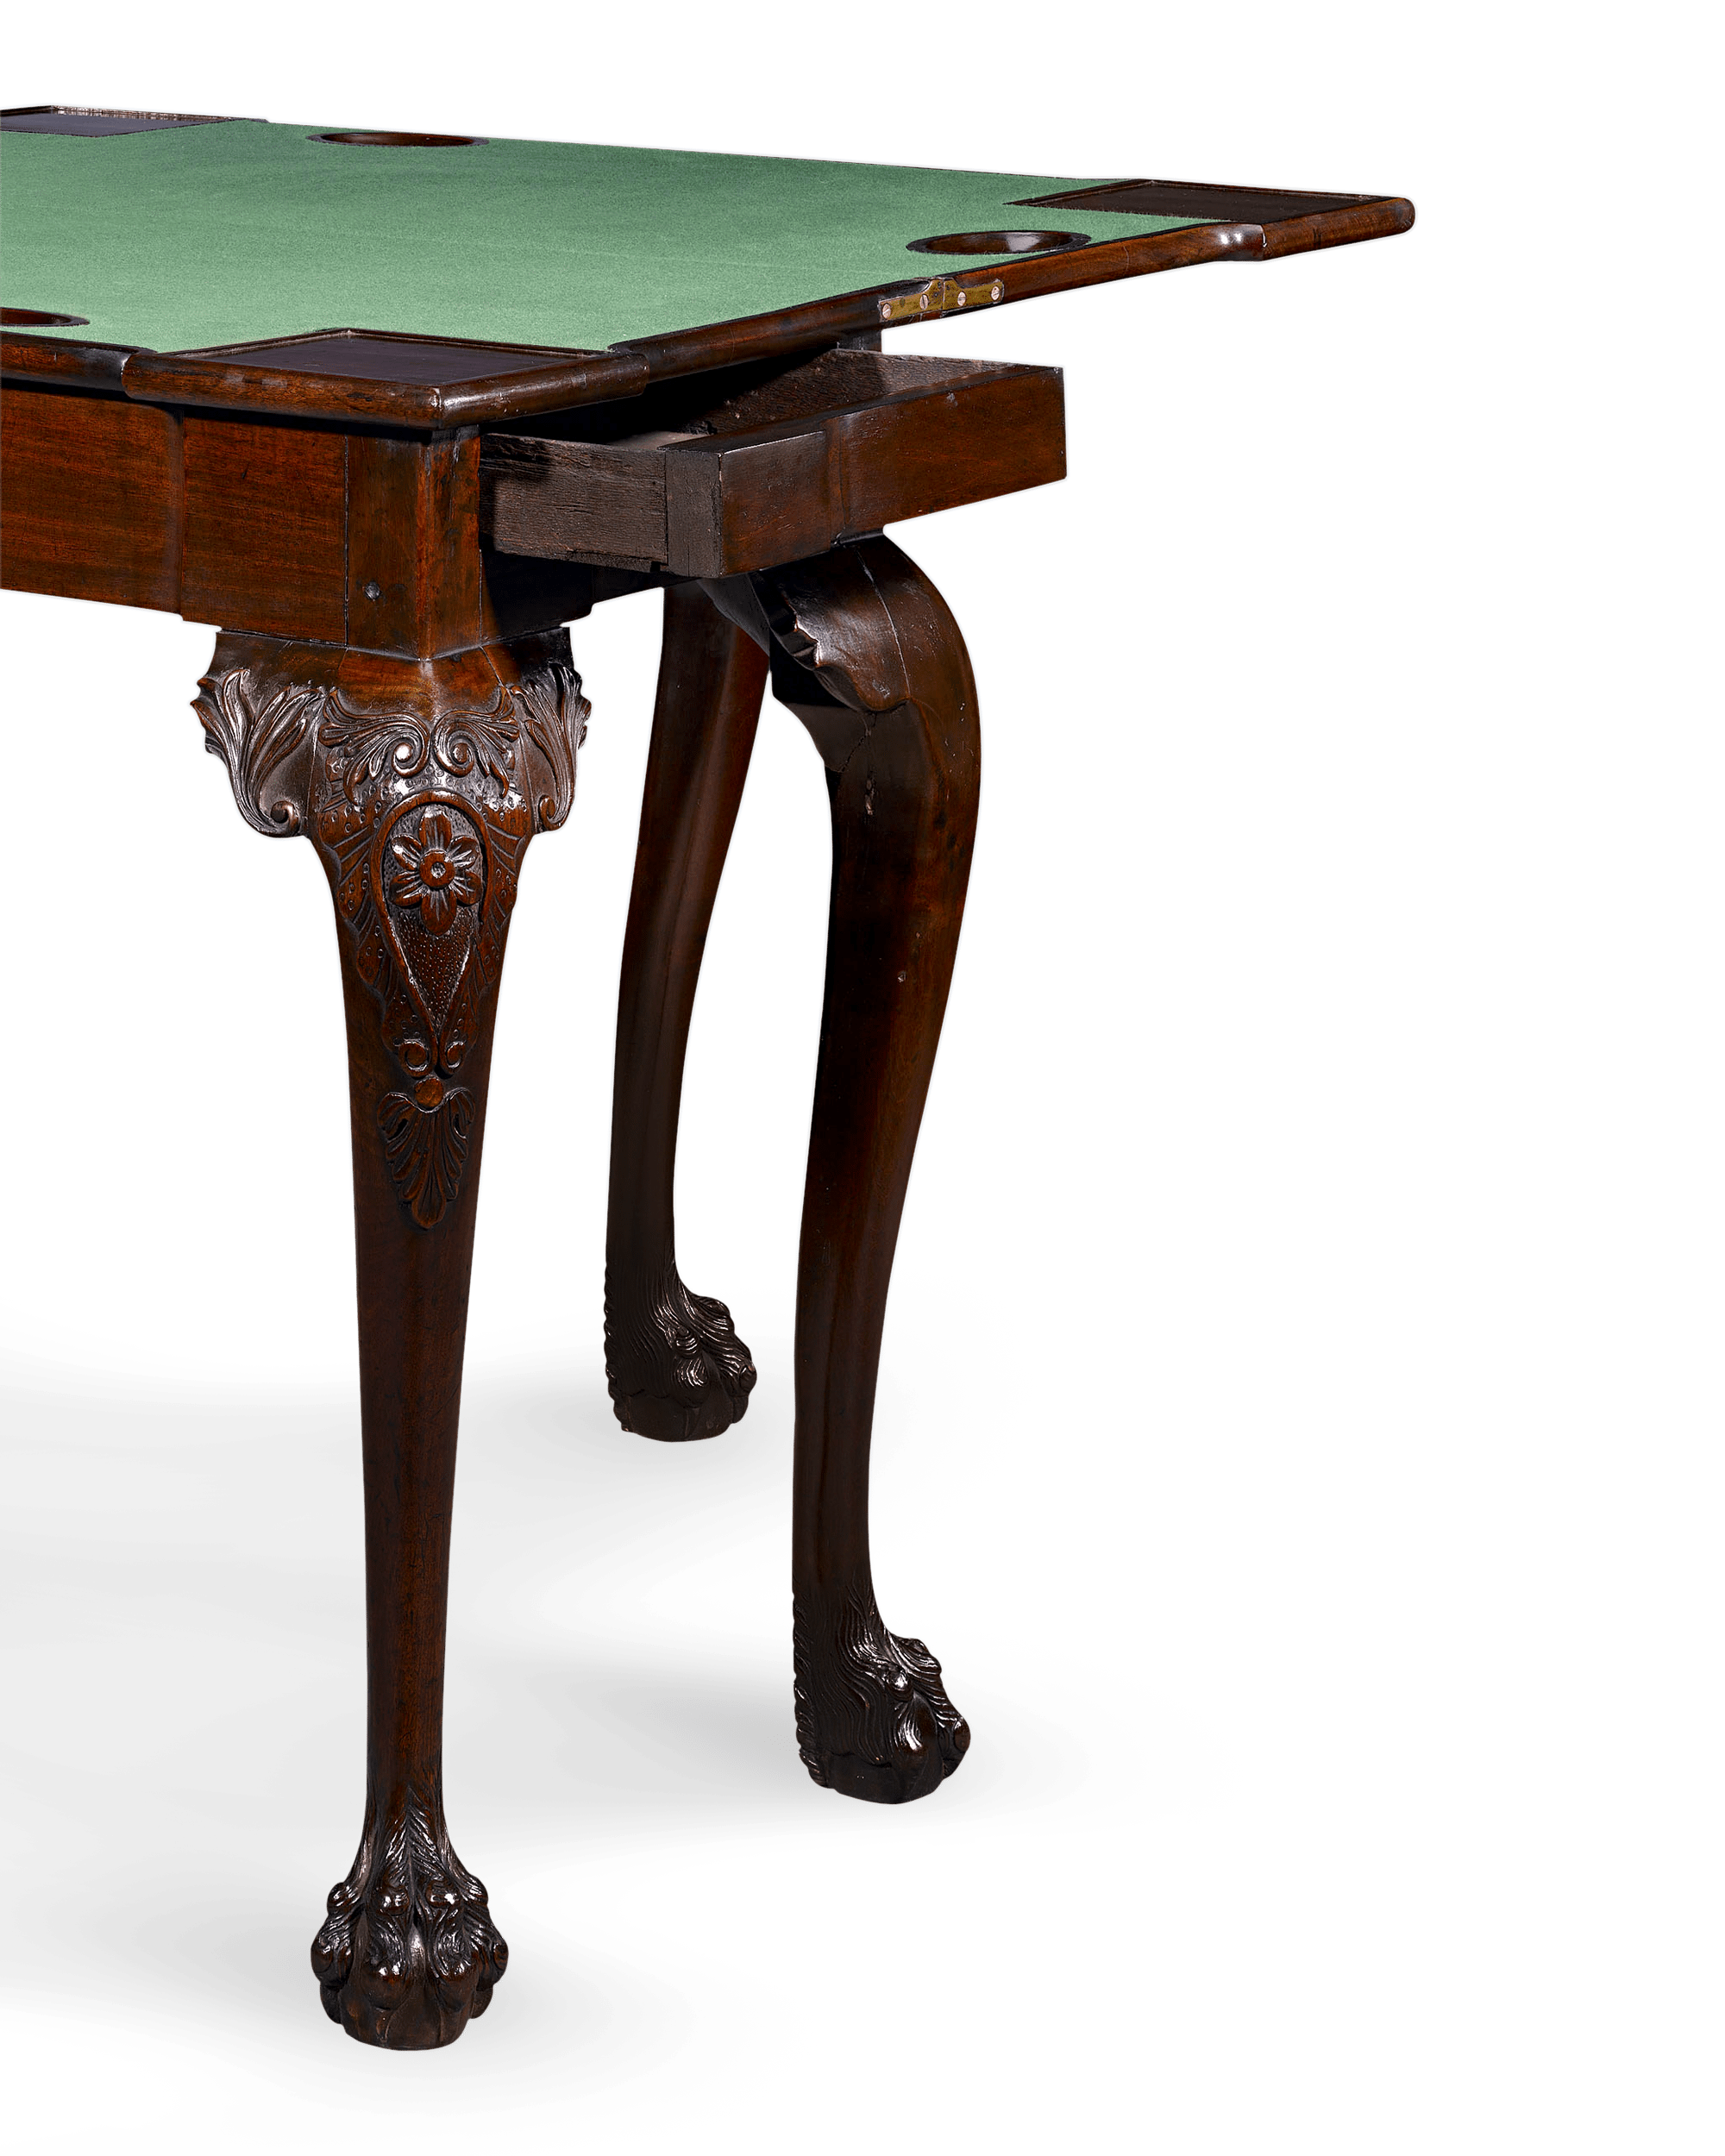 18th-Century Mahogany Irish Games Table